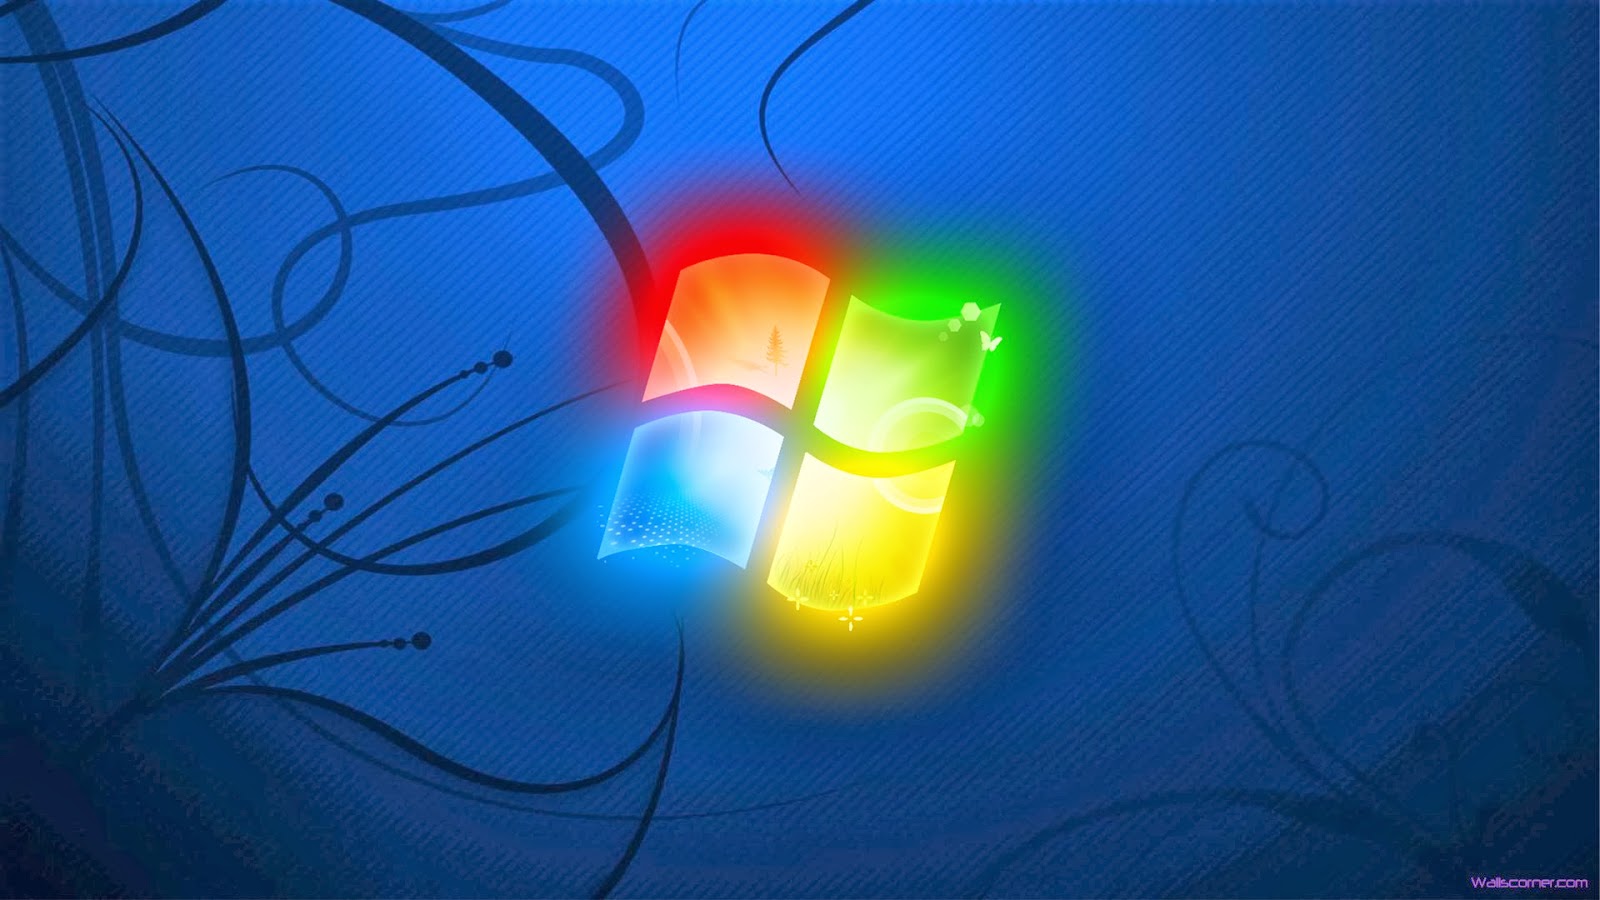 49+] Windows 7 Wallpaper HD 1920x1080 - WallpaperSafari